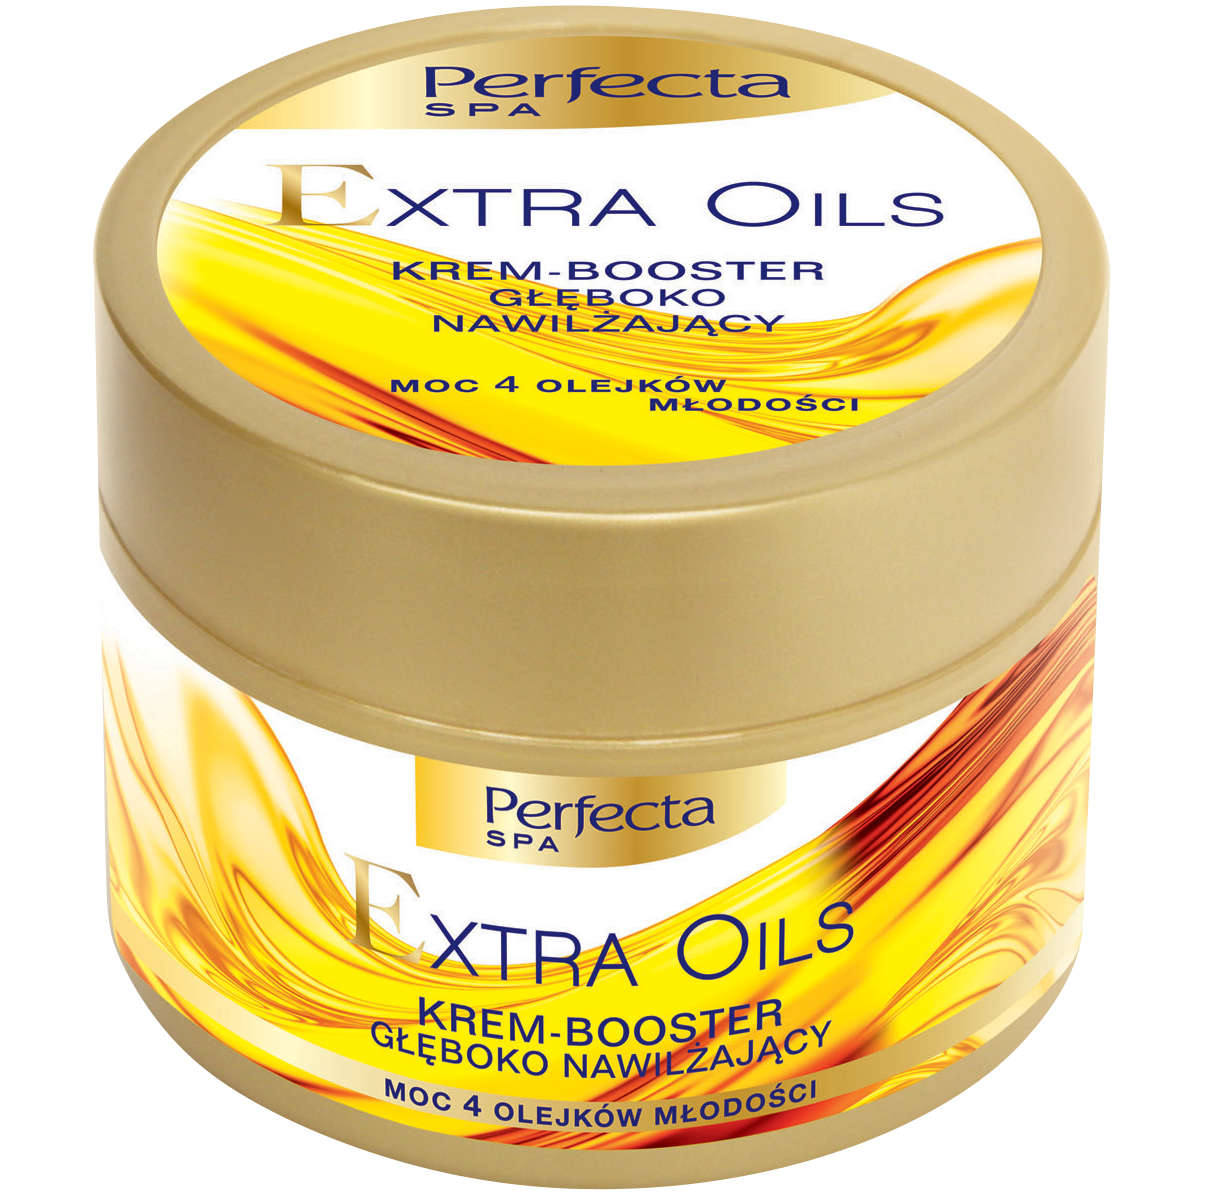 Perfecta Extra Oils глубоко увлажняющий крем-бустер, 225 мл